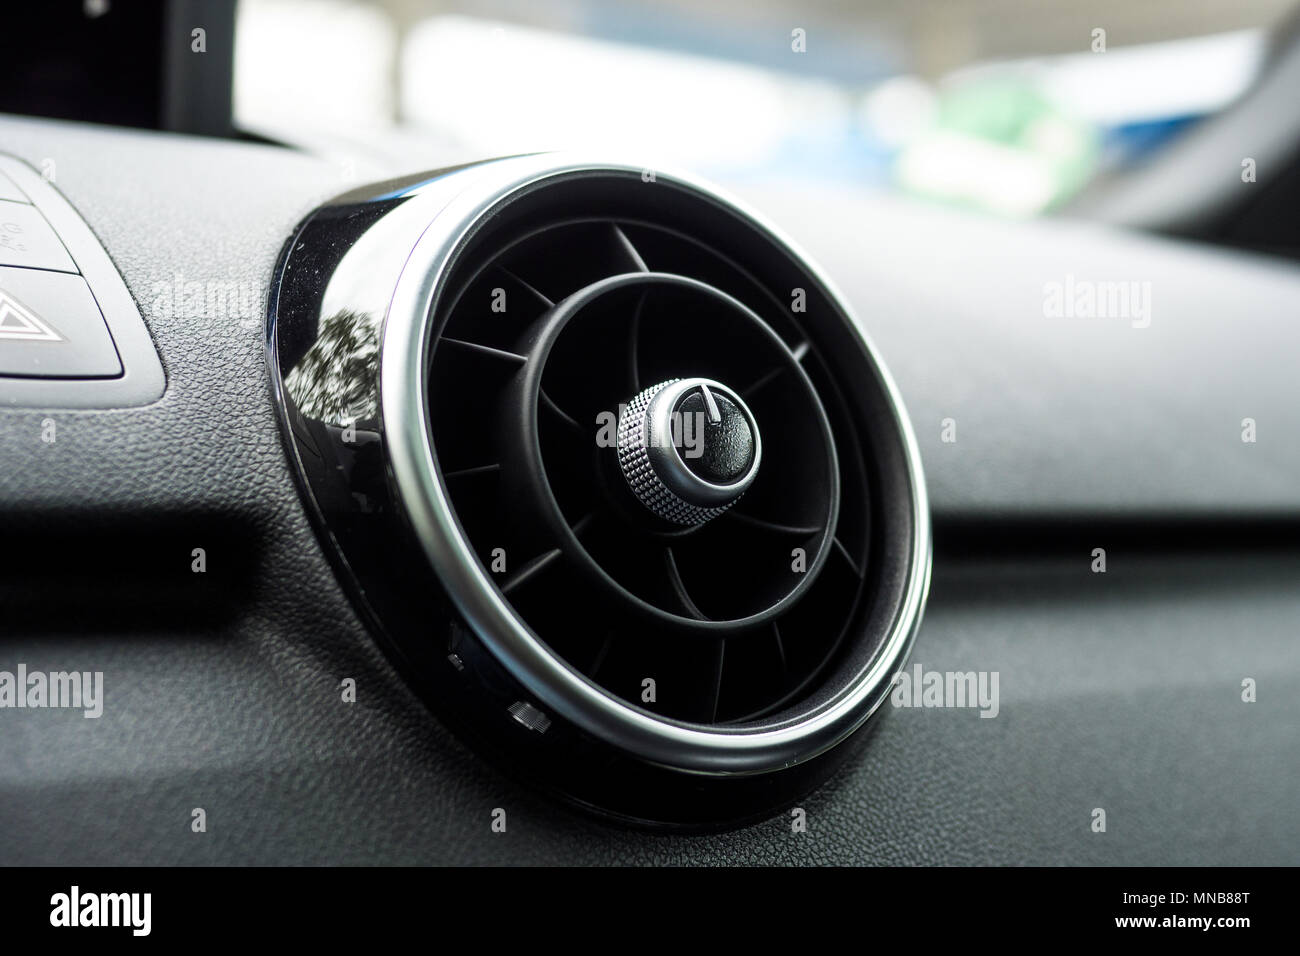 https://c8.alamy.com/comp/MNB88T/round-car-ventilation-grille-on-dashboard-of-a-modern-luxury-car-close-up-MNB88T.jpg